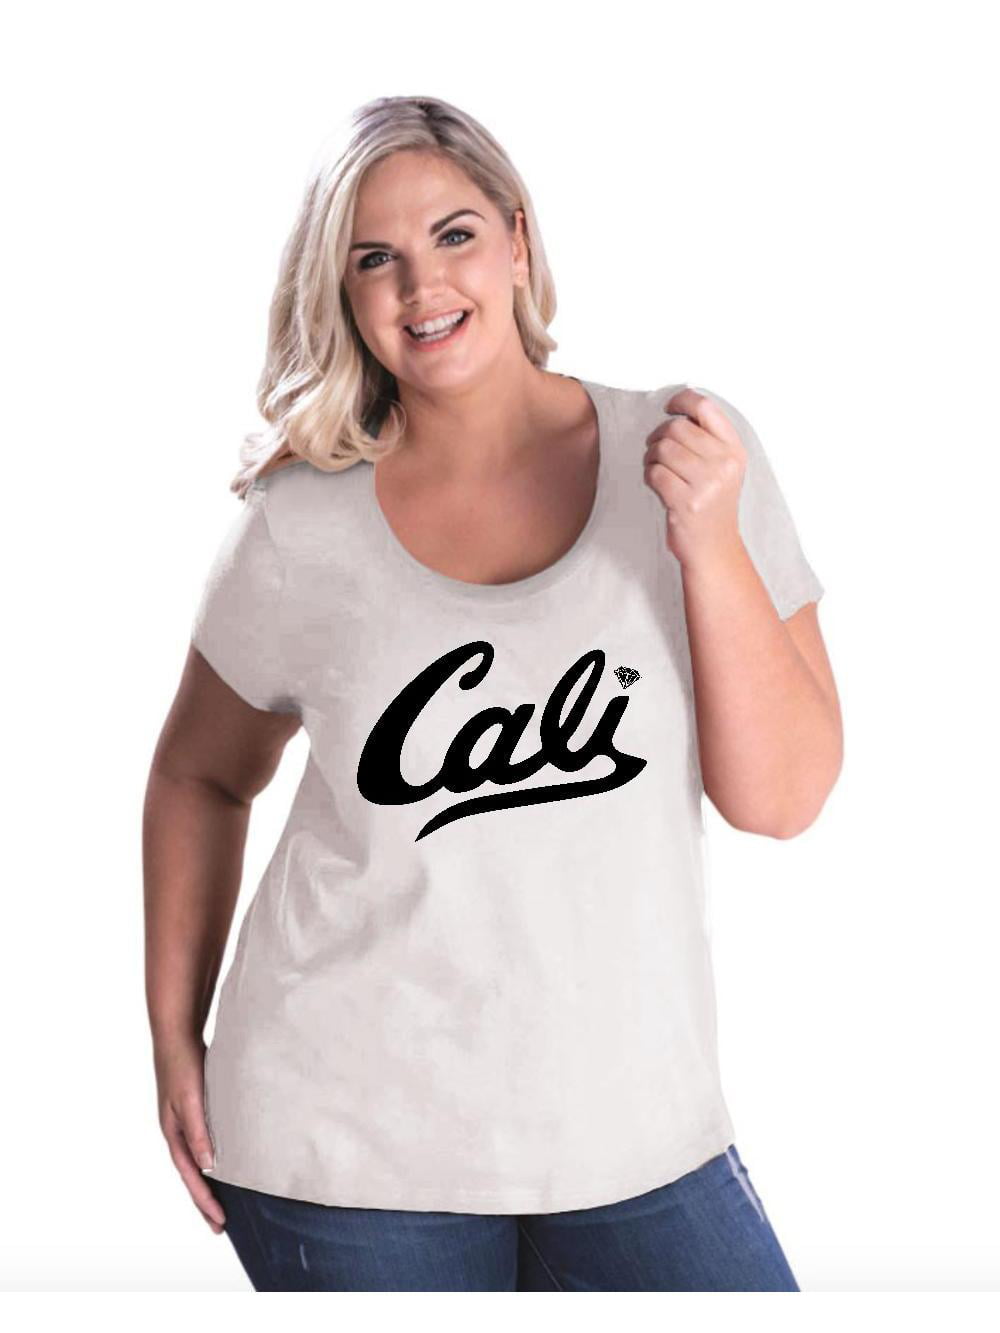 MmF - Women's Plus Size Curvy T-Shirt, up to Size 28 - California Cali ...